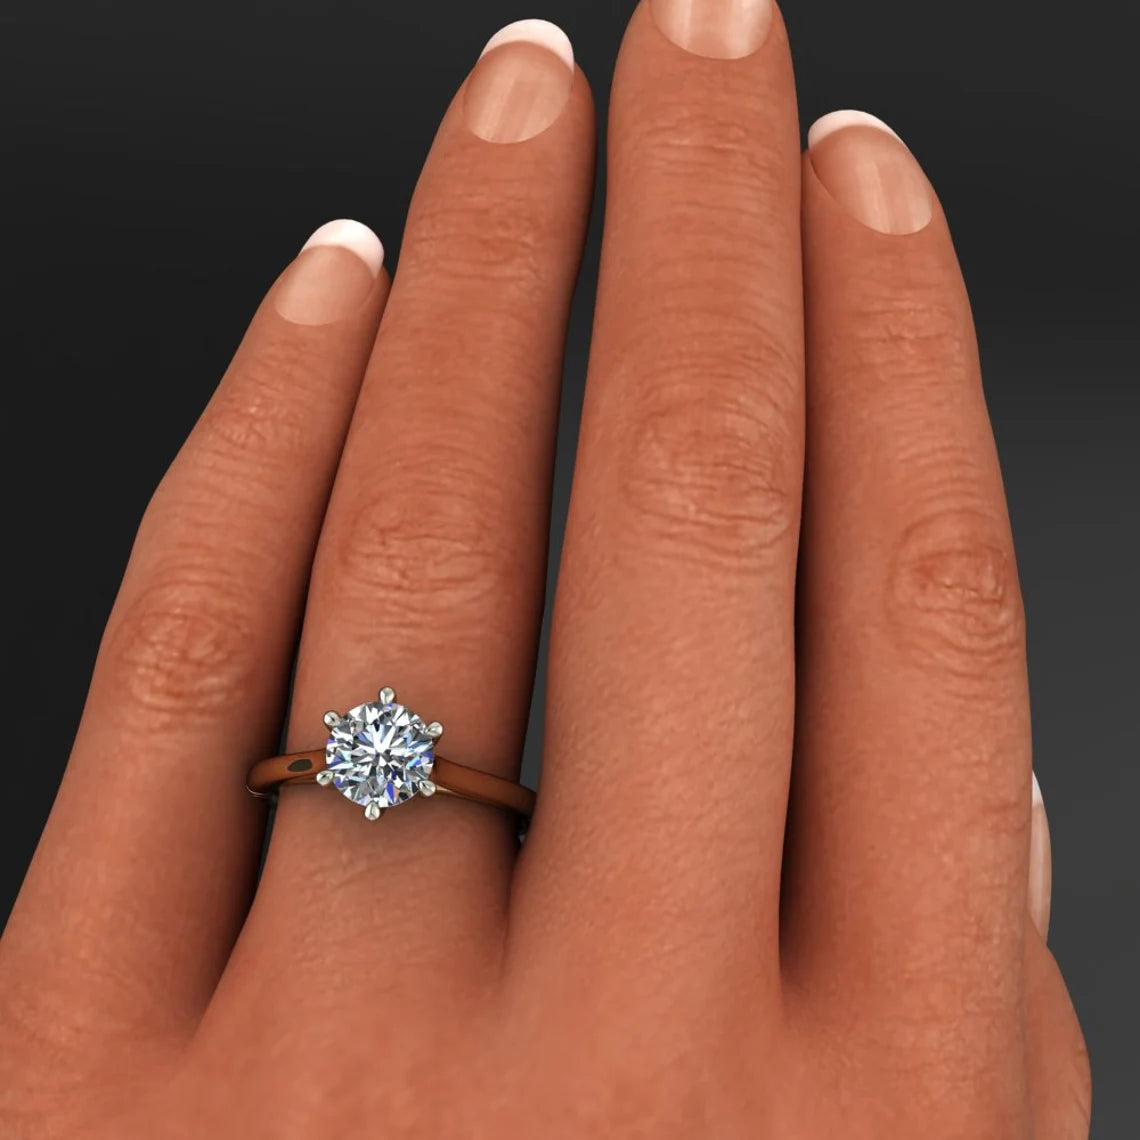 Buy All Stone 1 Carat Diamond Ring White Gold Original Certified VVS1 Diamonds  Ring D Color Heere Ki Anguthi Real Hira Stone Eye Clear Solitaire Diamond  Rings A+++ हीरा रिंग हीरा रत्न